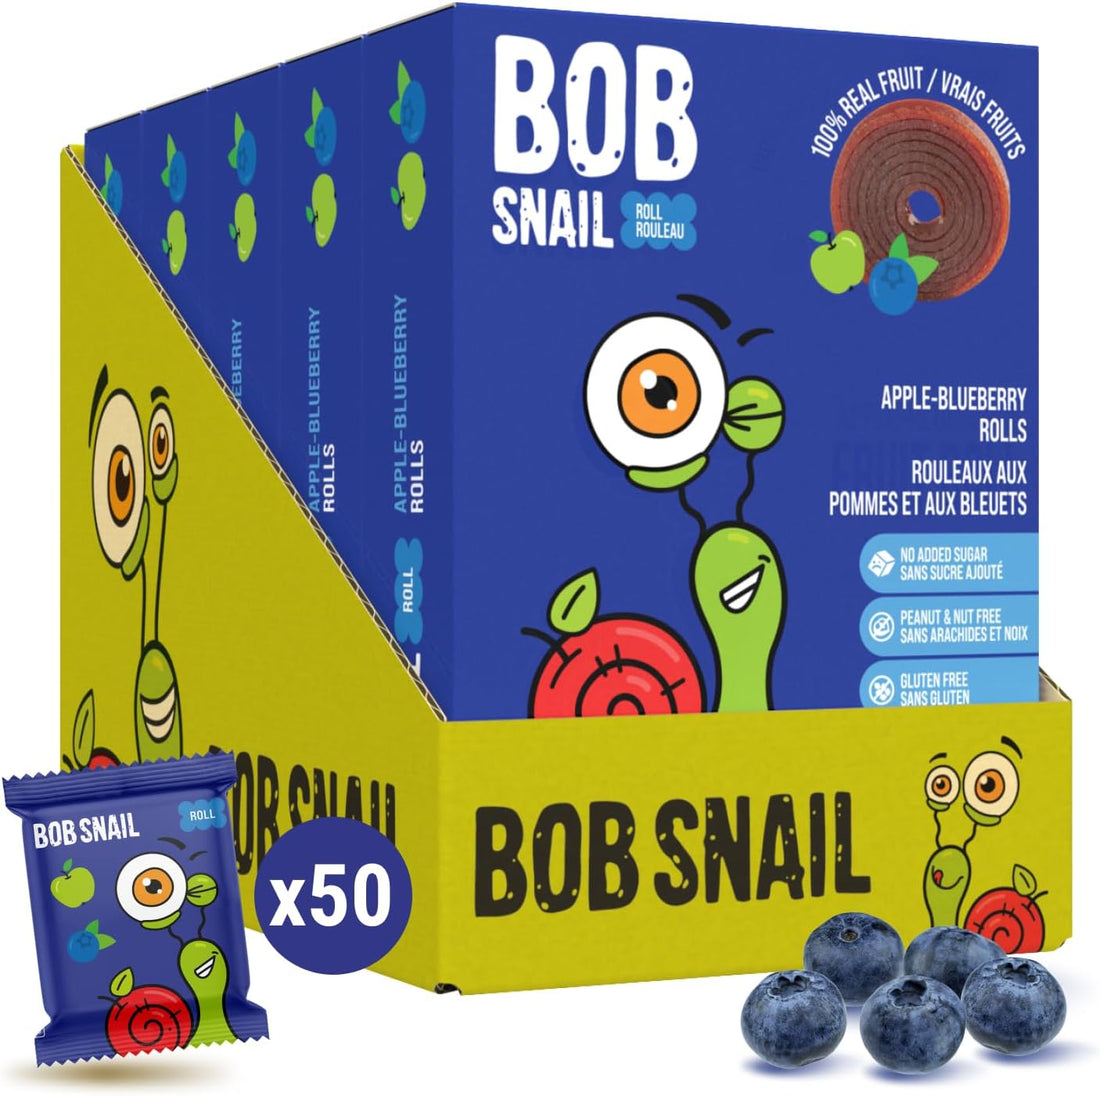 Bob Snail Fruit Rolls Apple Blueberry Box of 5x100g (European)